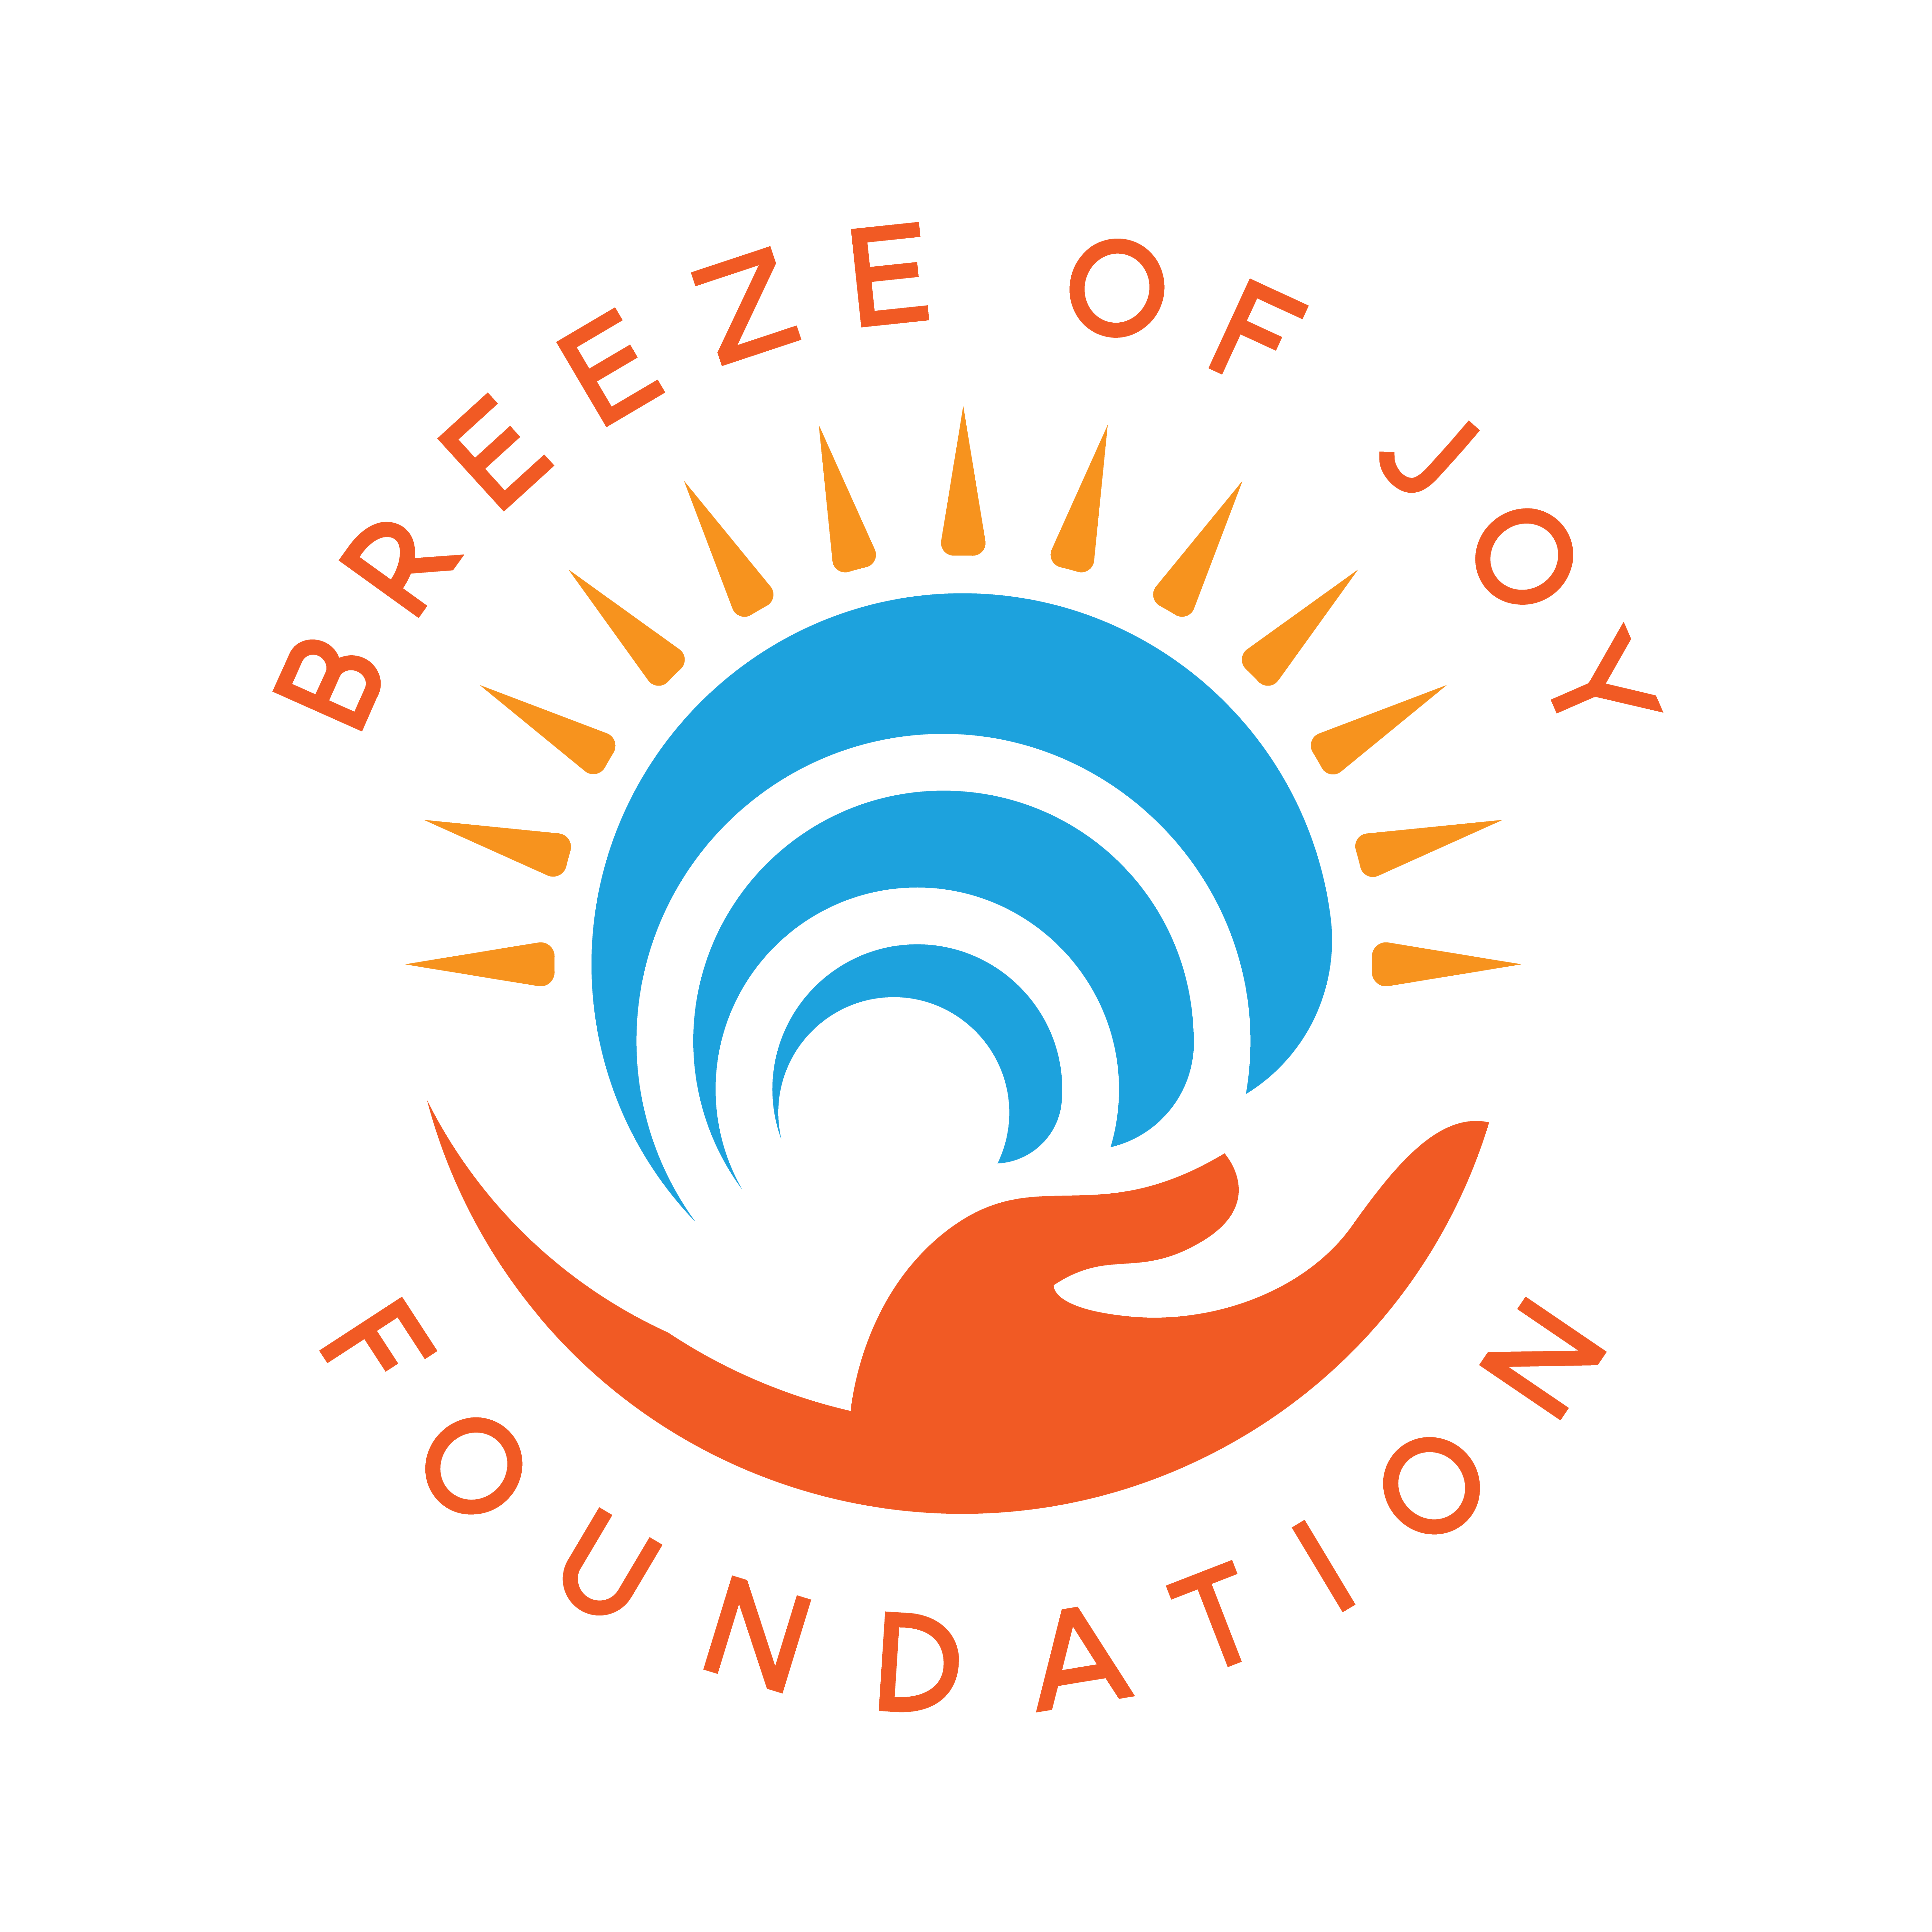 Breeze of Joy Foundation logo